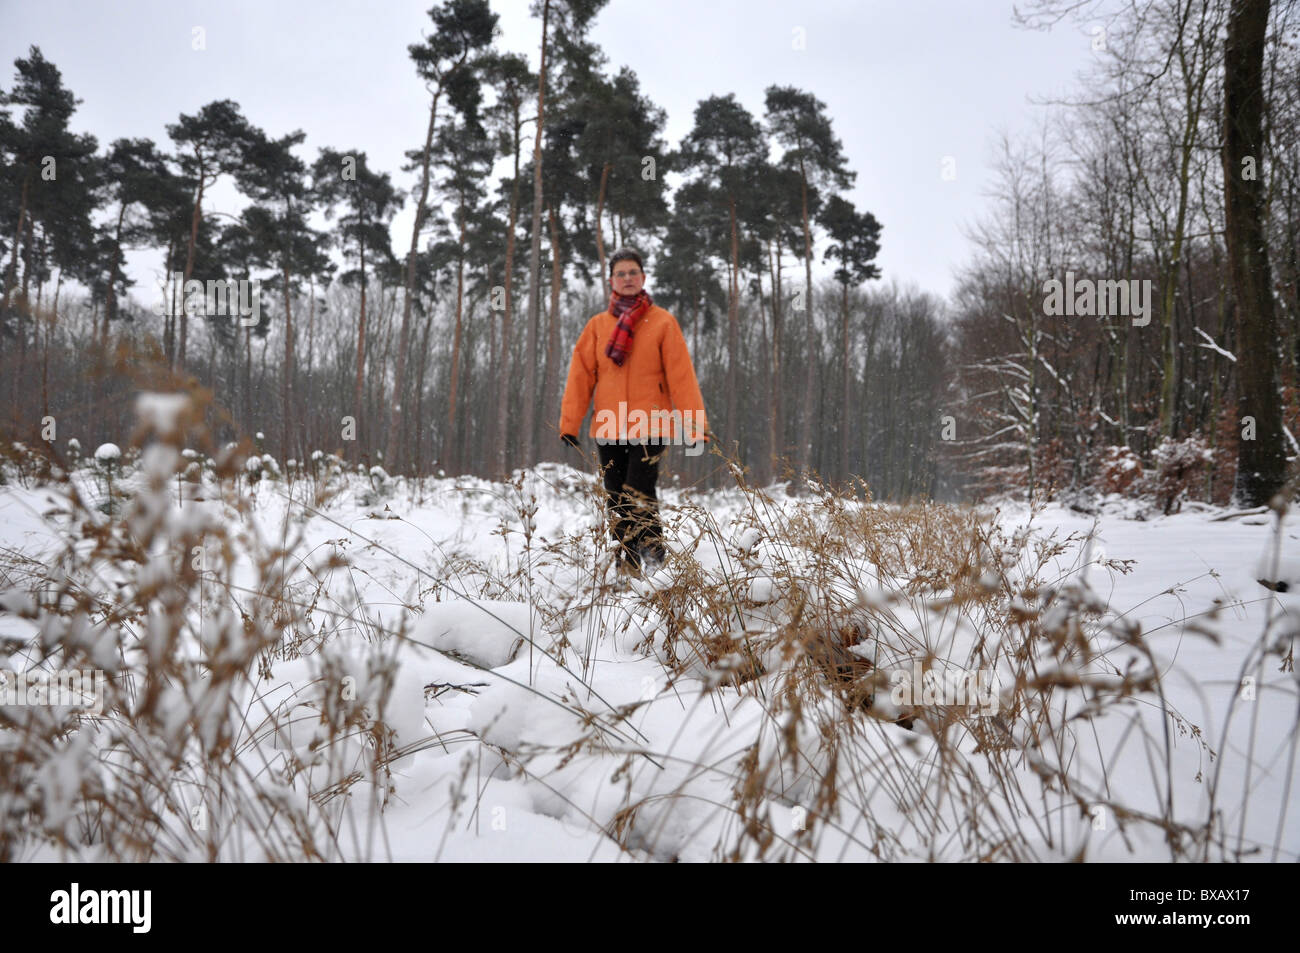 Senior woman strawling in snowy fields Stock Photo